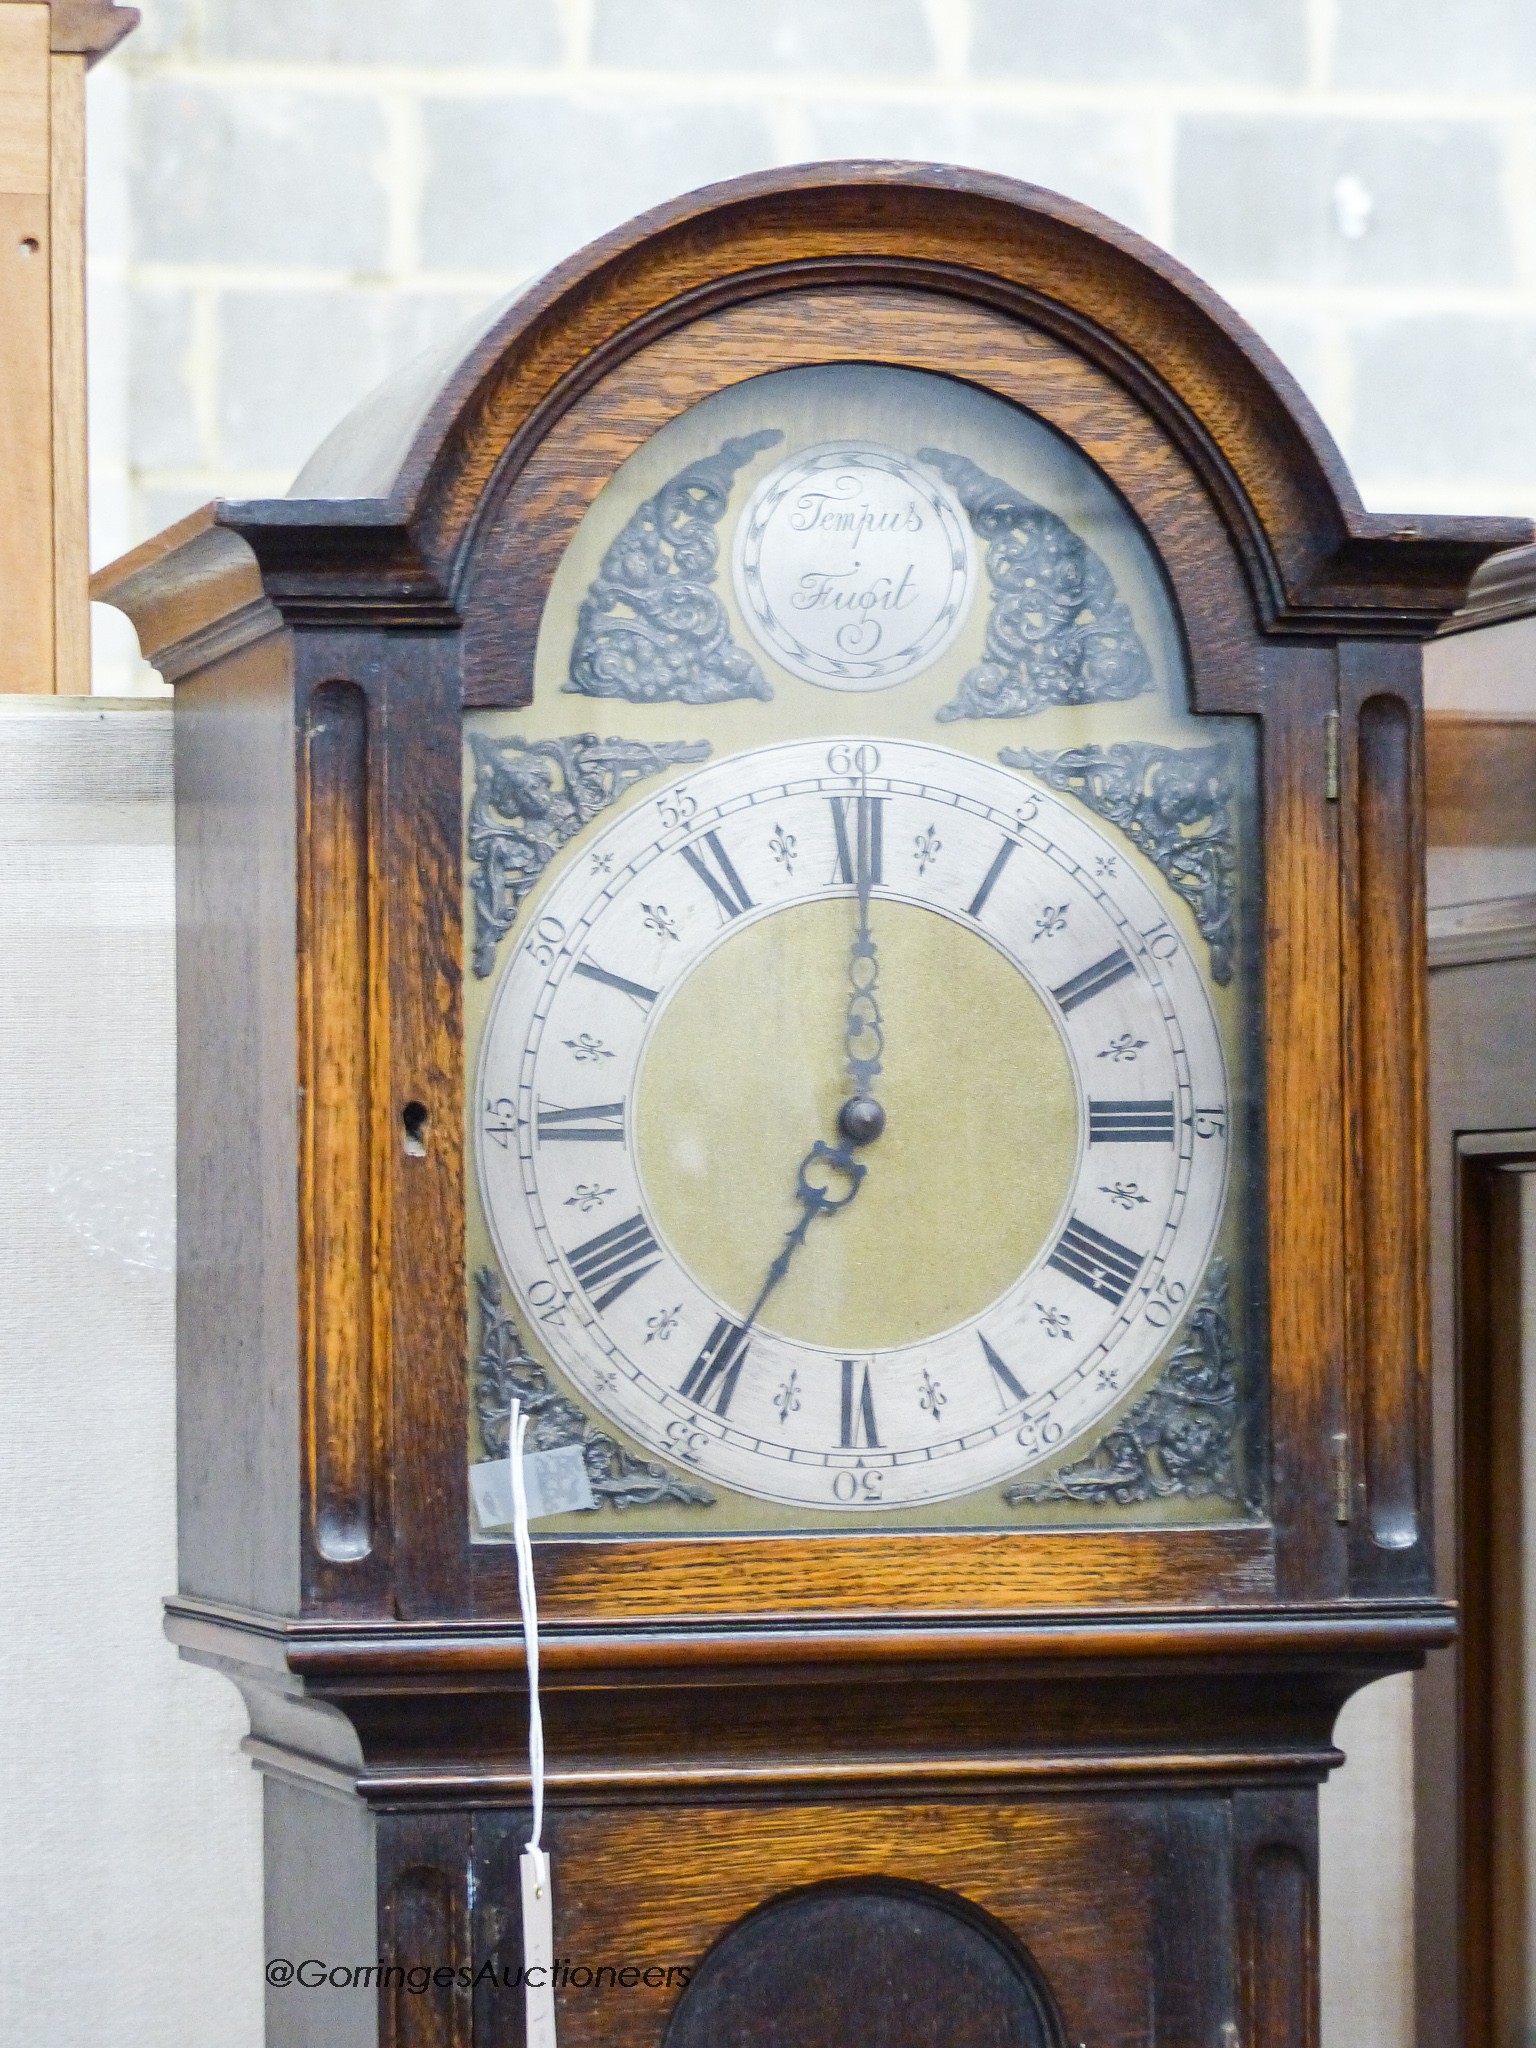 A 1920's oak longcase clock, height 193cm